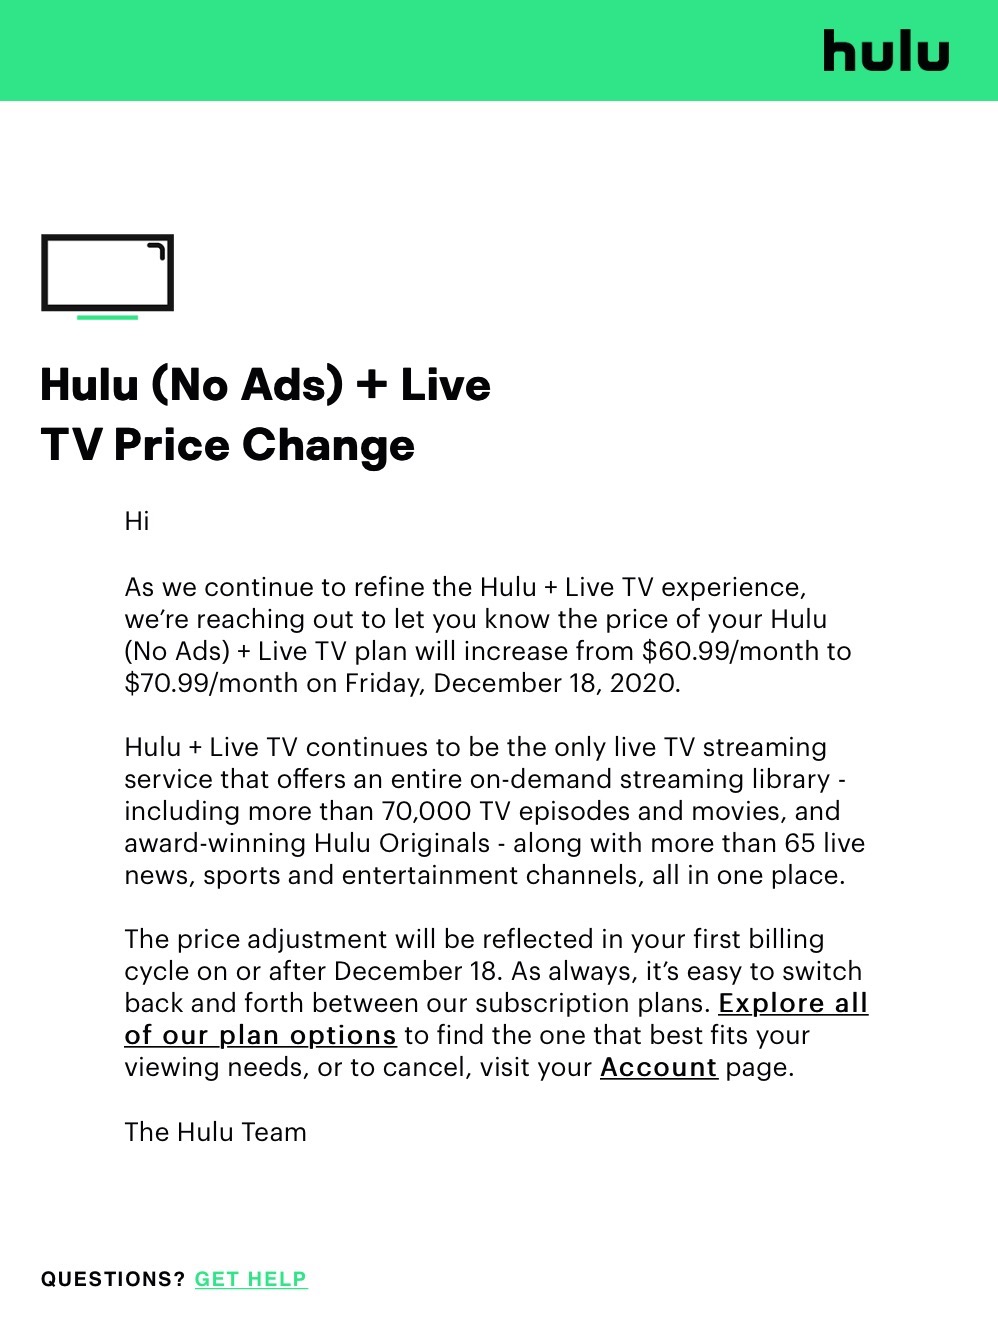 Hulu Announces 18% Price Increase for Live TV Service